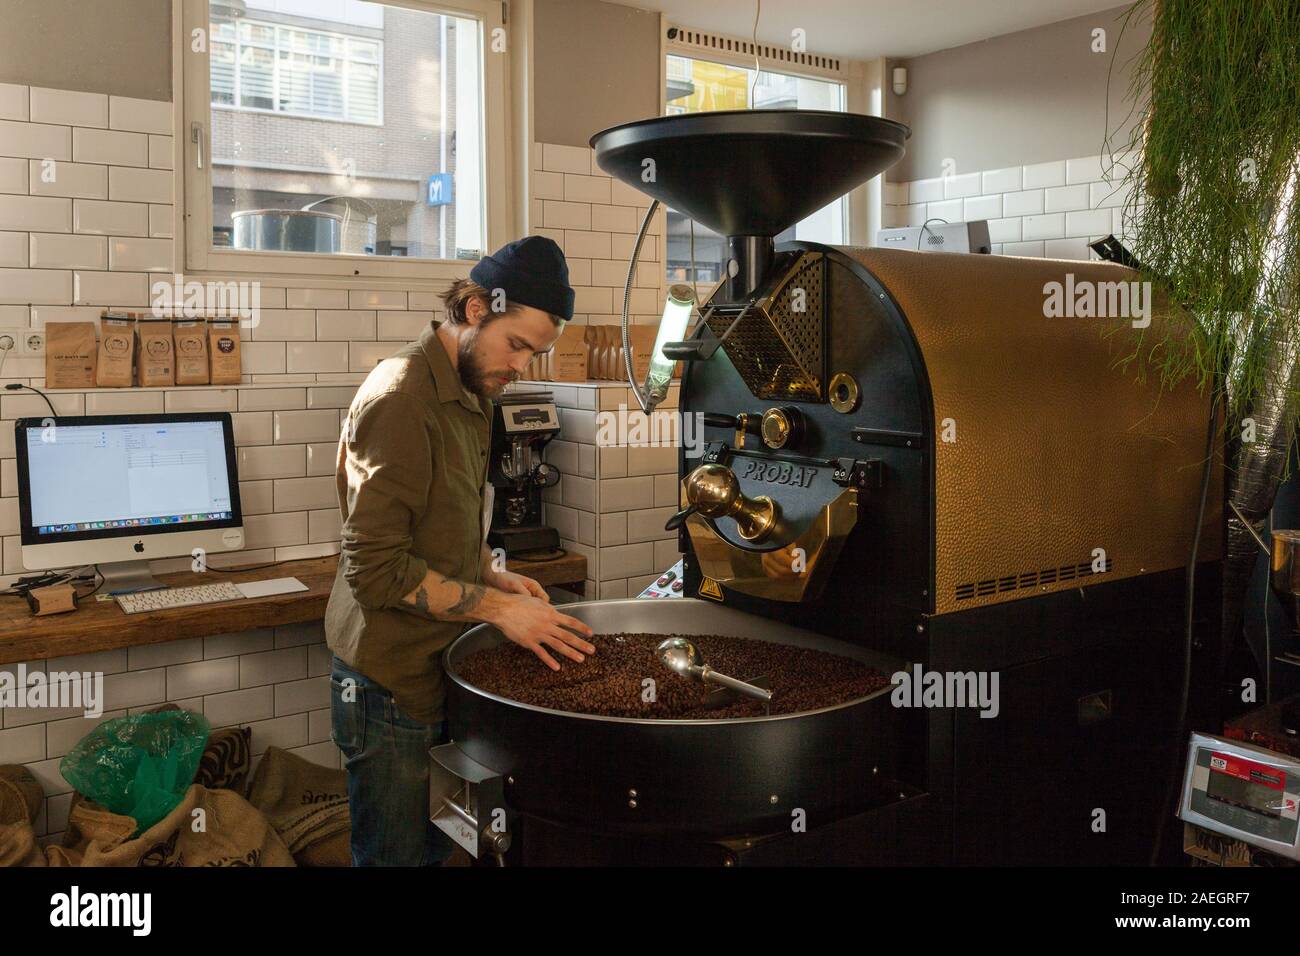 Los 61 Kaffeebar, Amsterdam Stockfoto